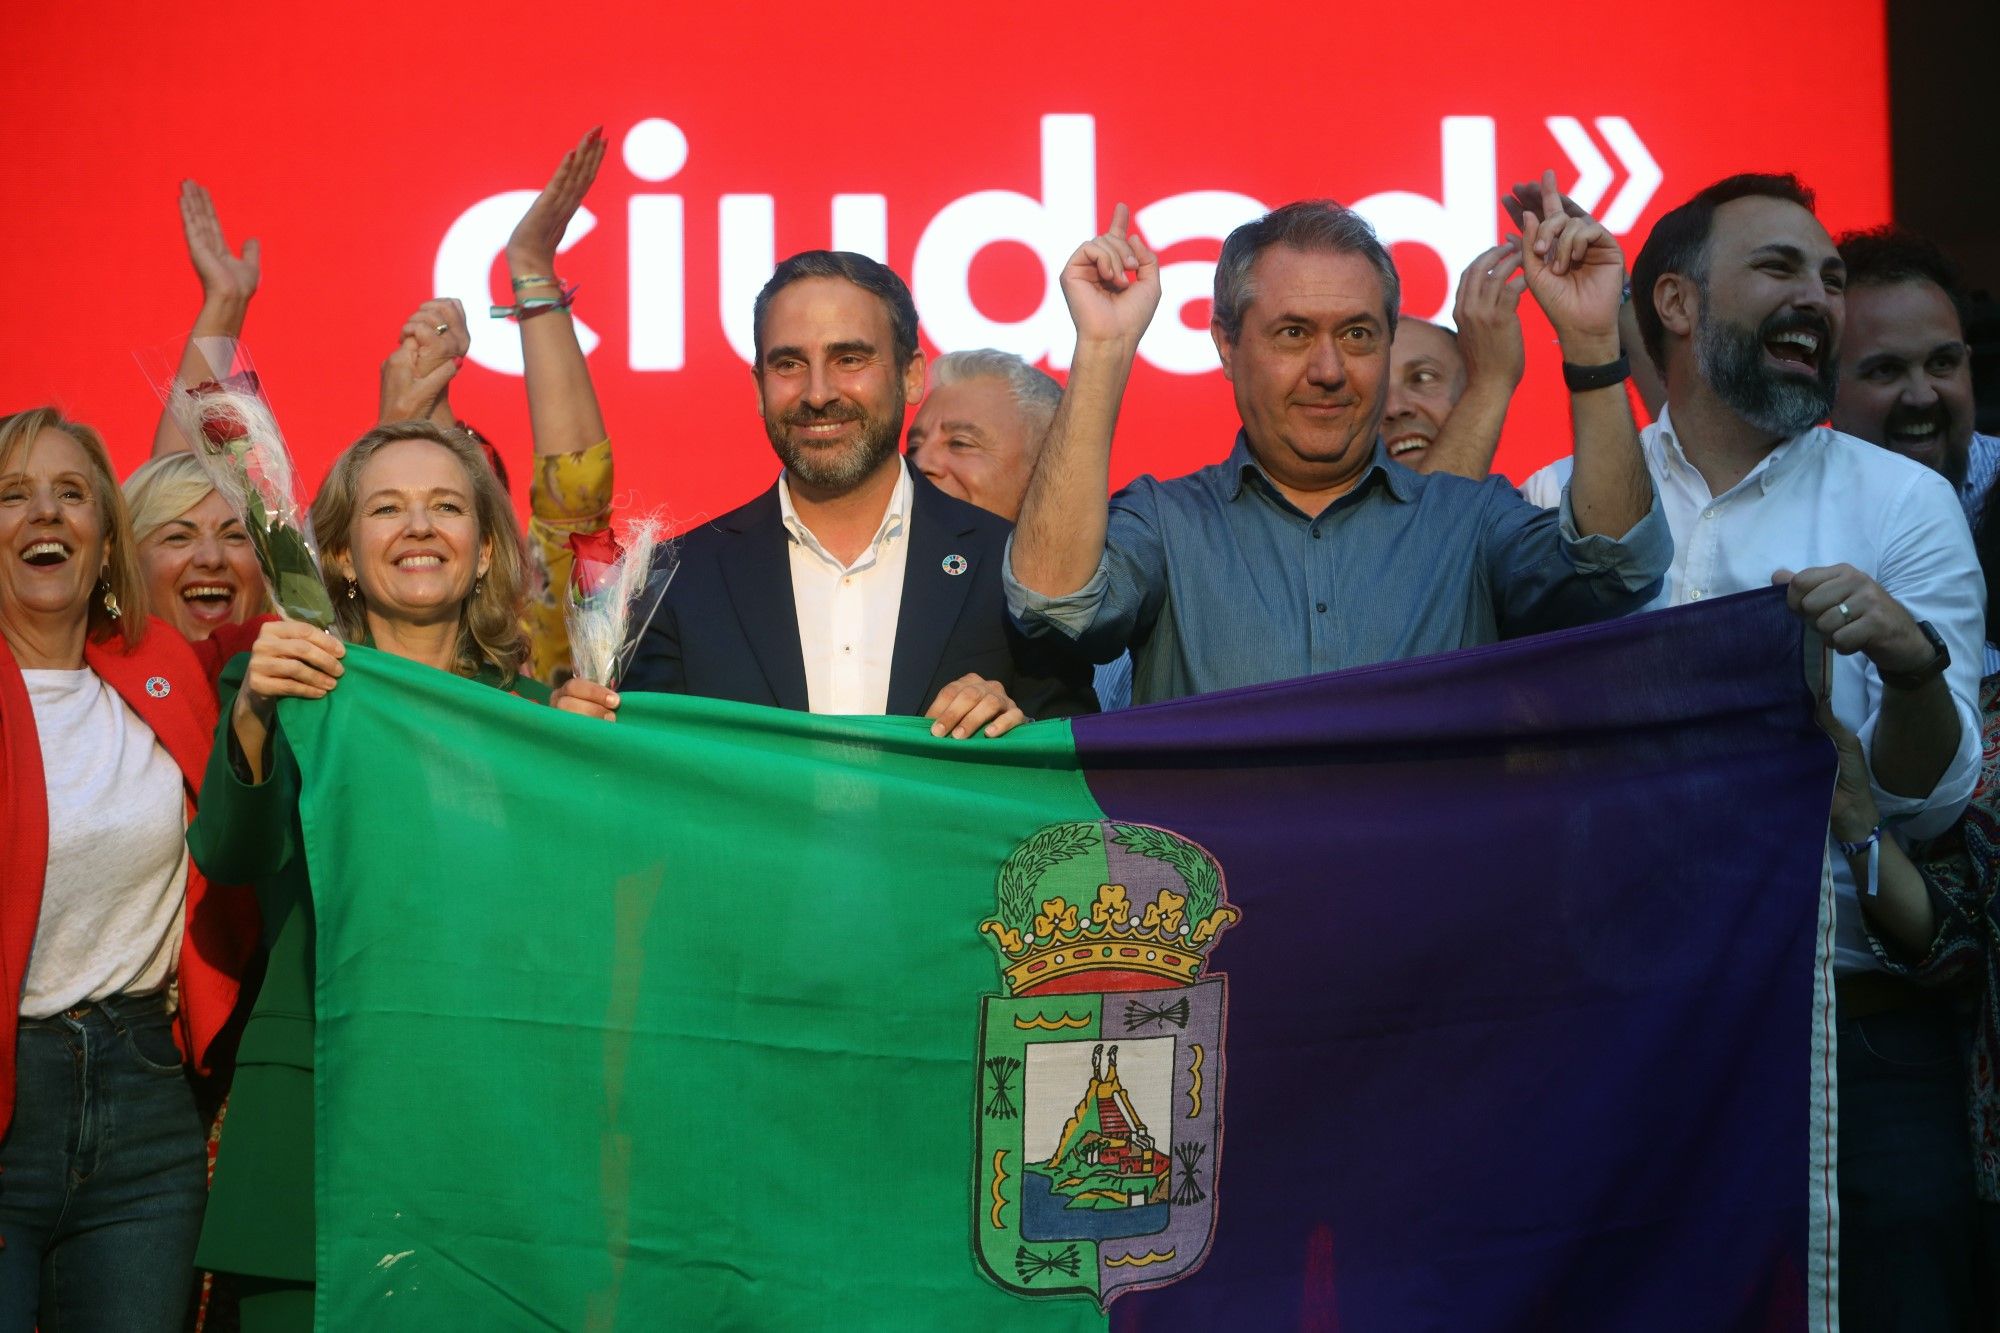 Calviño y Espadas apoyan a Dani Pérez en el acto de fin de campaña del PSOE en Málaga capital